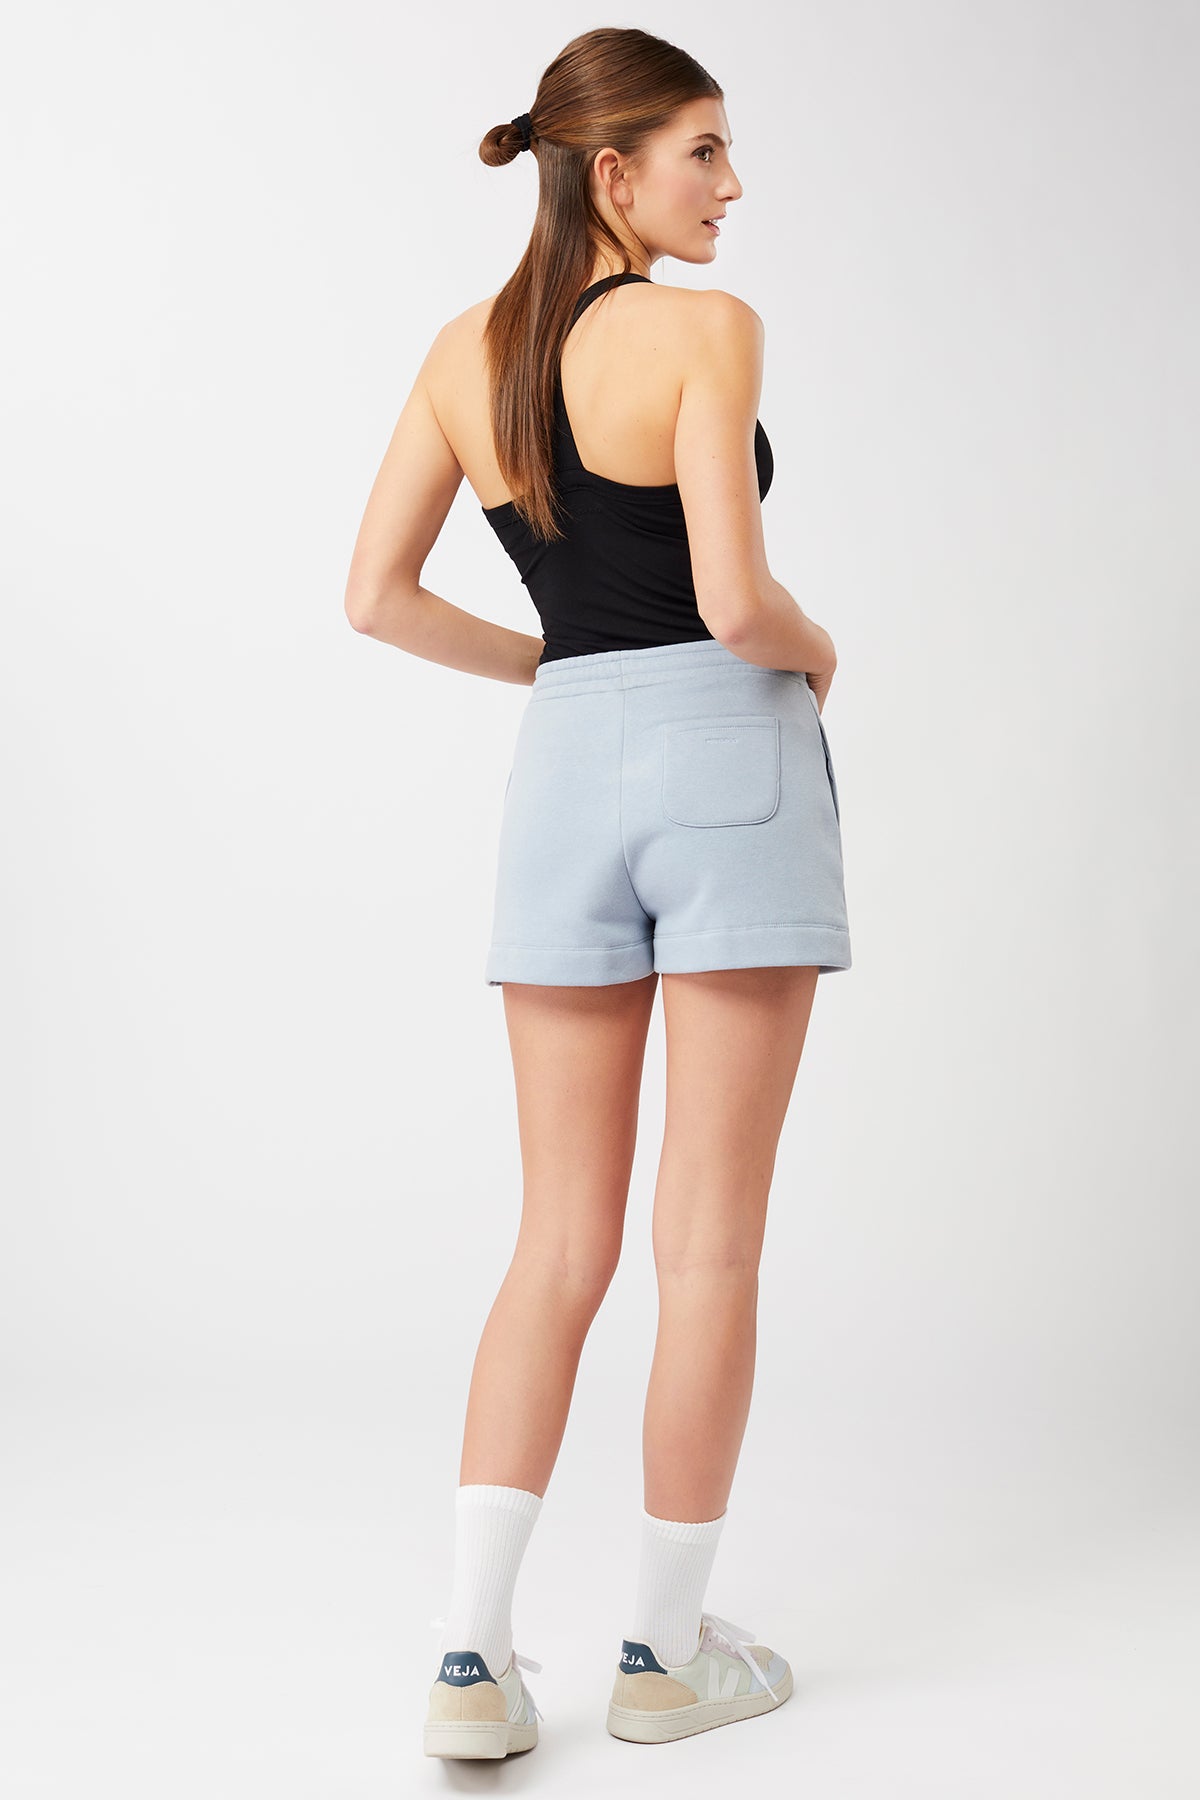 Mandala Yoga Short Grau Outfit Rückseite - Natural Dye Shorts